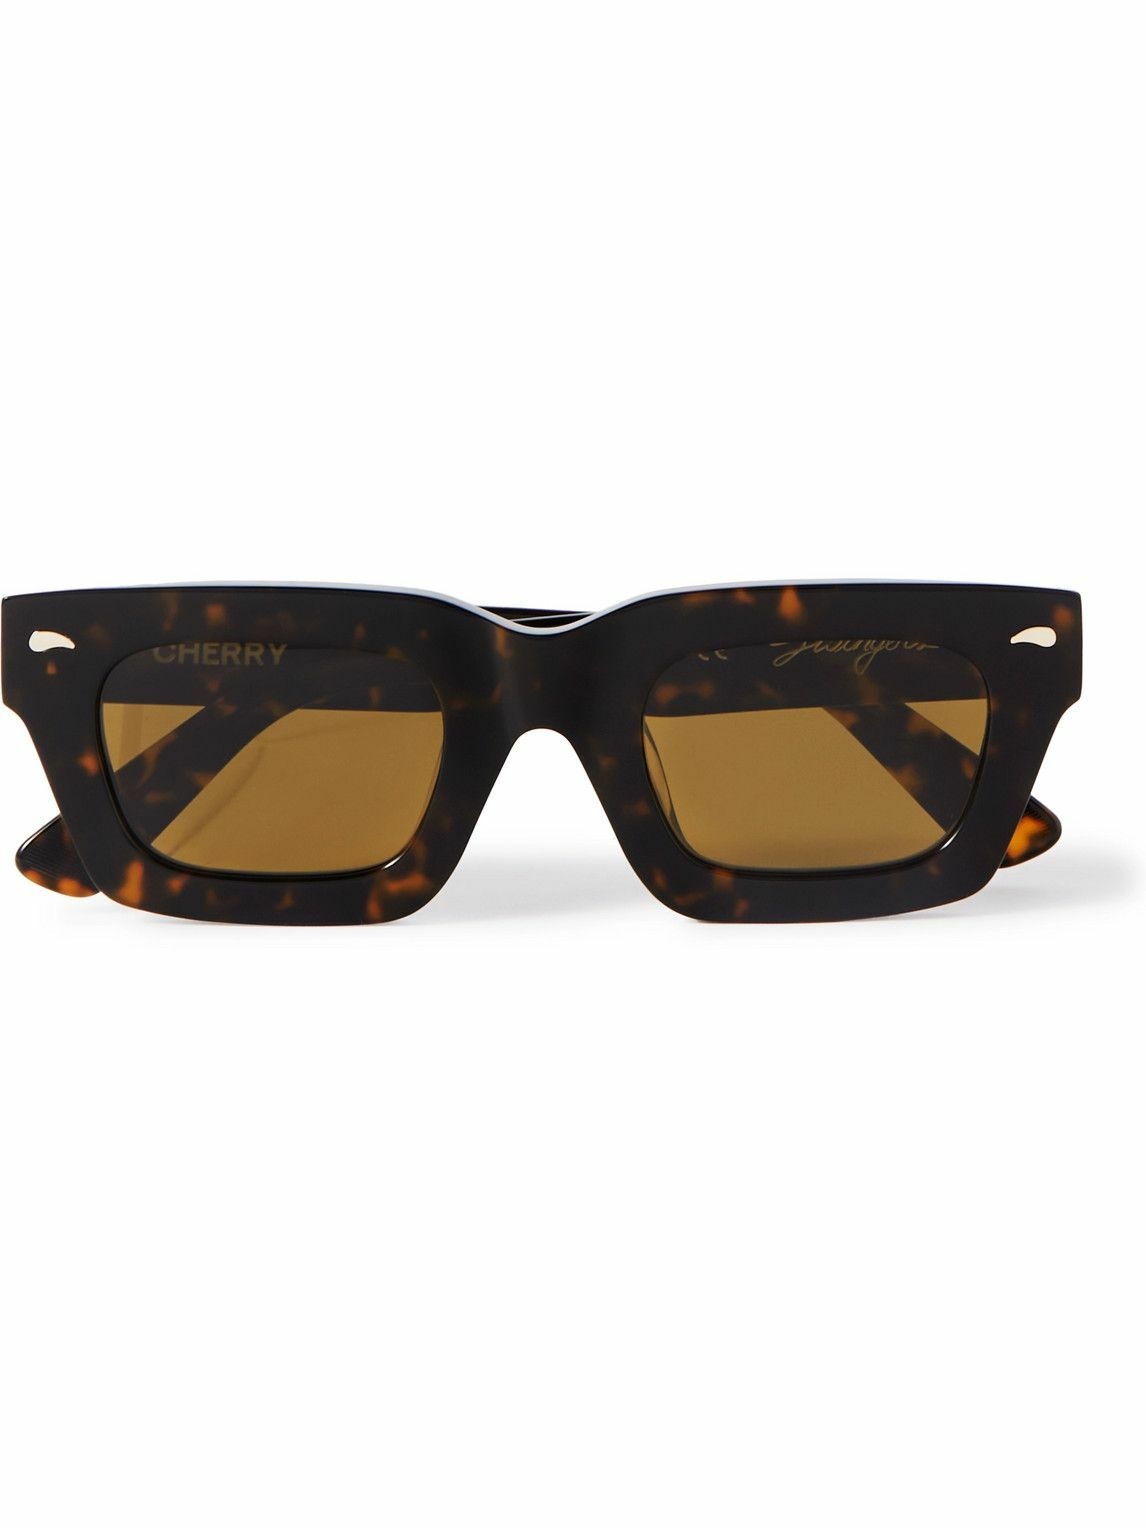 Photo: Cherry Los Angeles - Swingers D-Frame Tortoiseshell Acetate Sunglasses